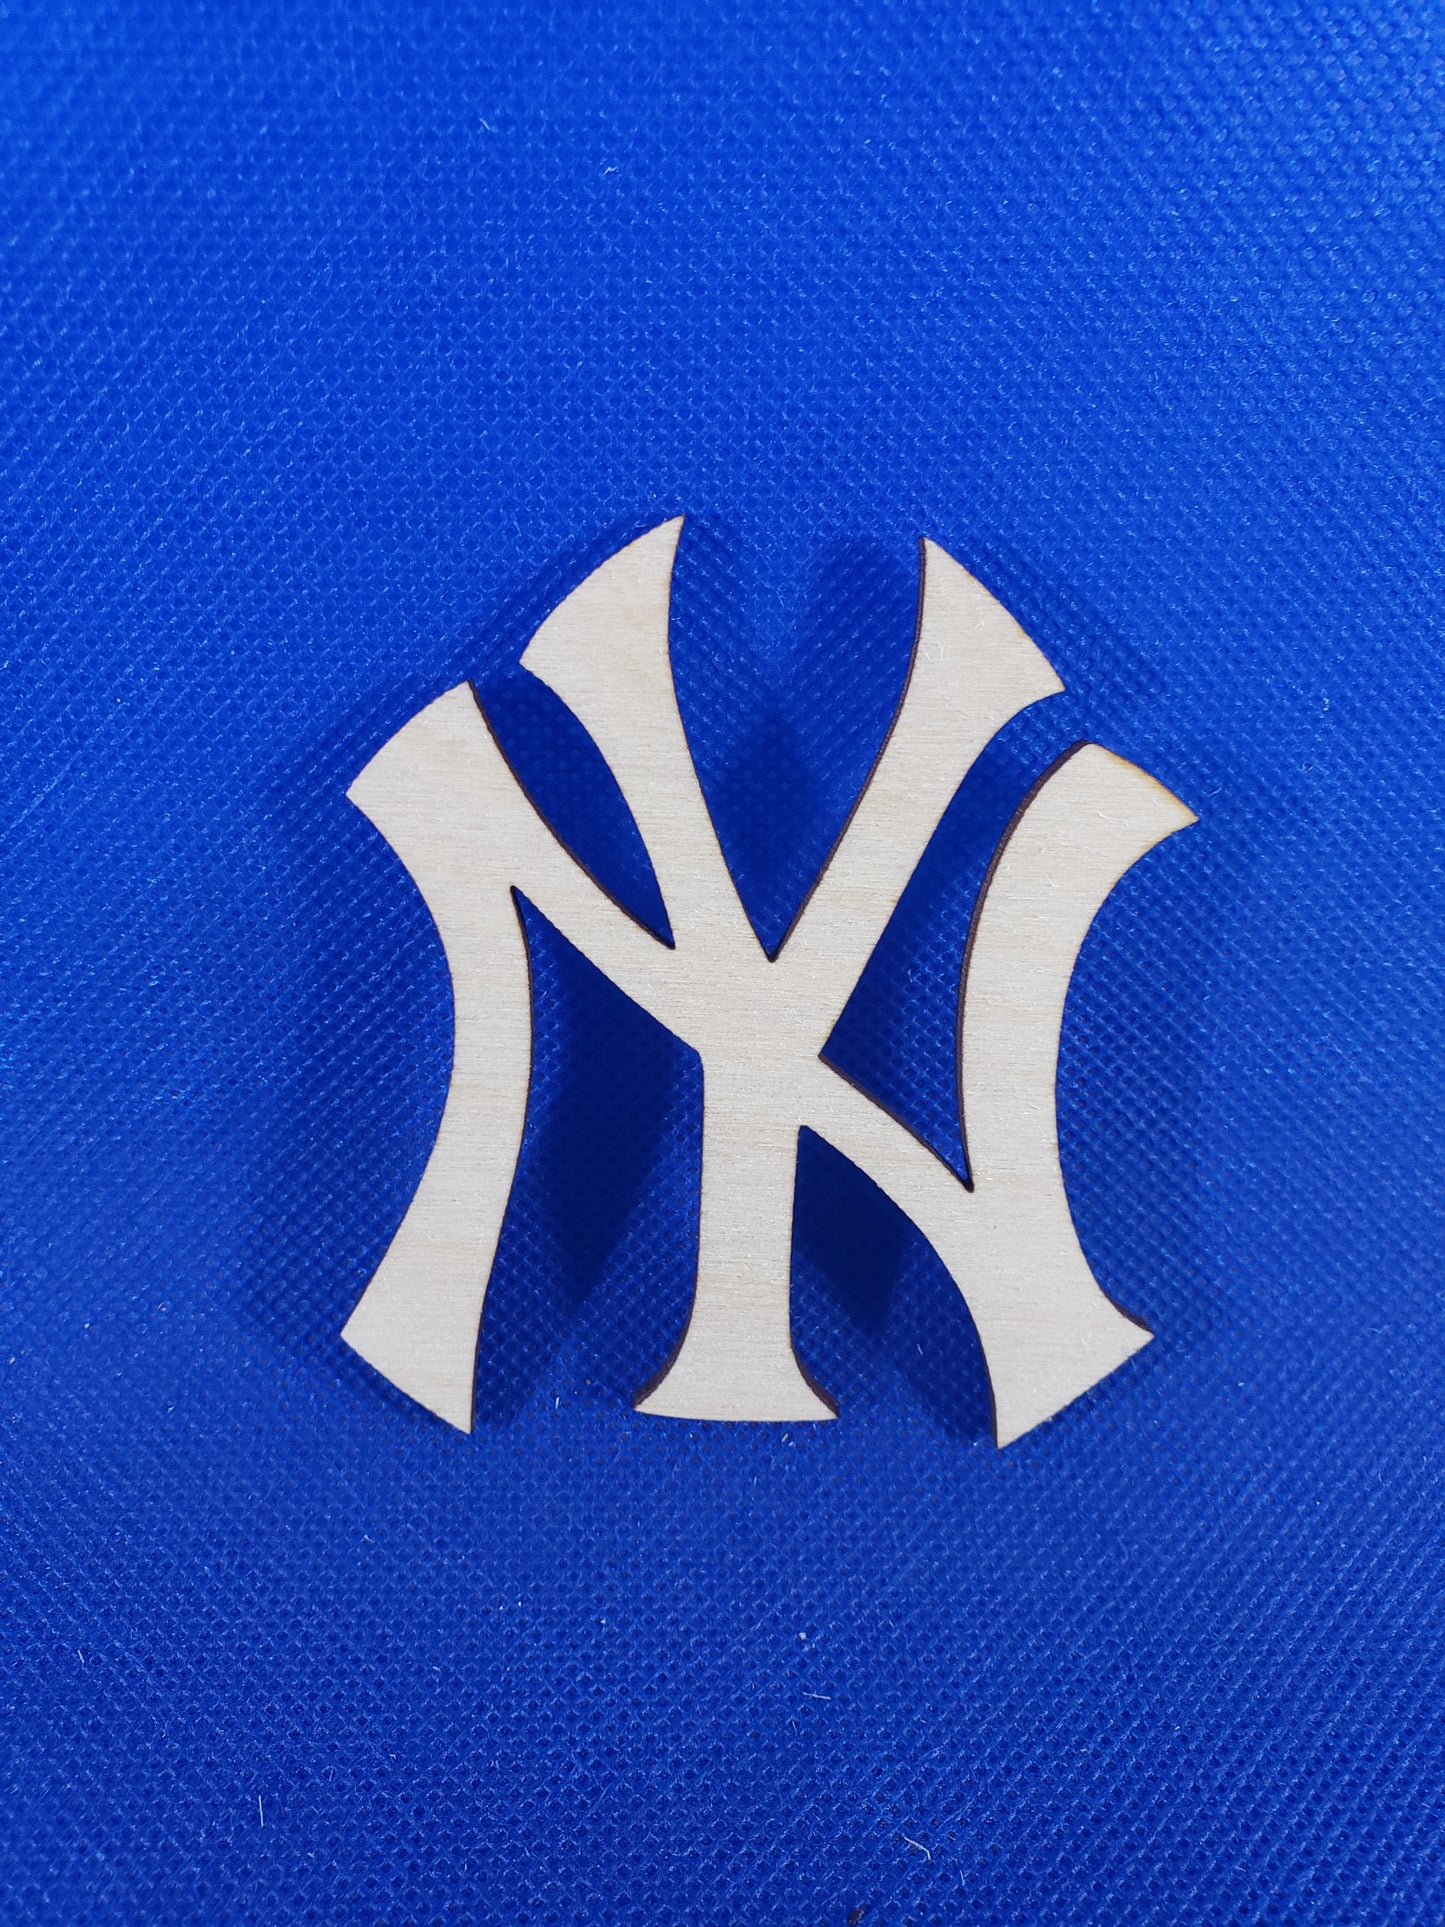 New York Yankees Logo - Laser cut natural wooden blanks